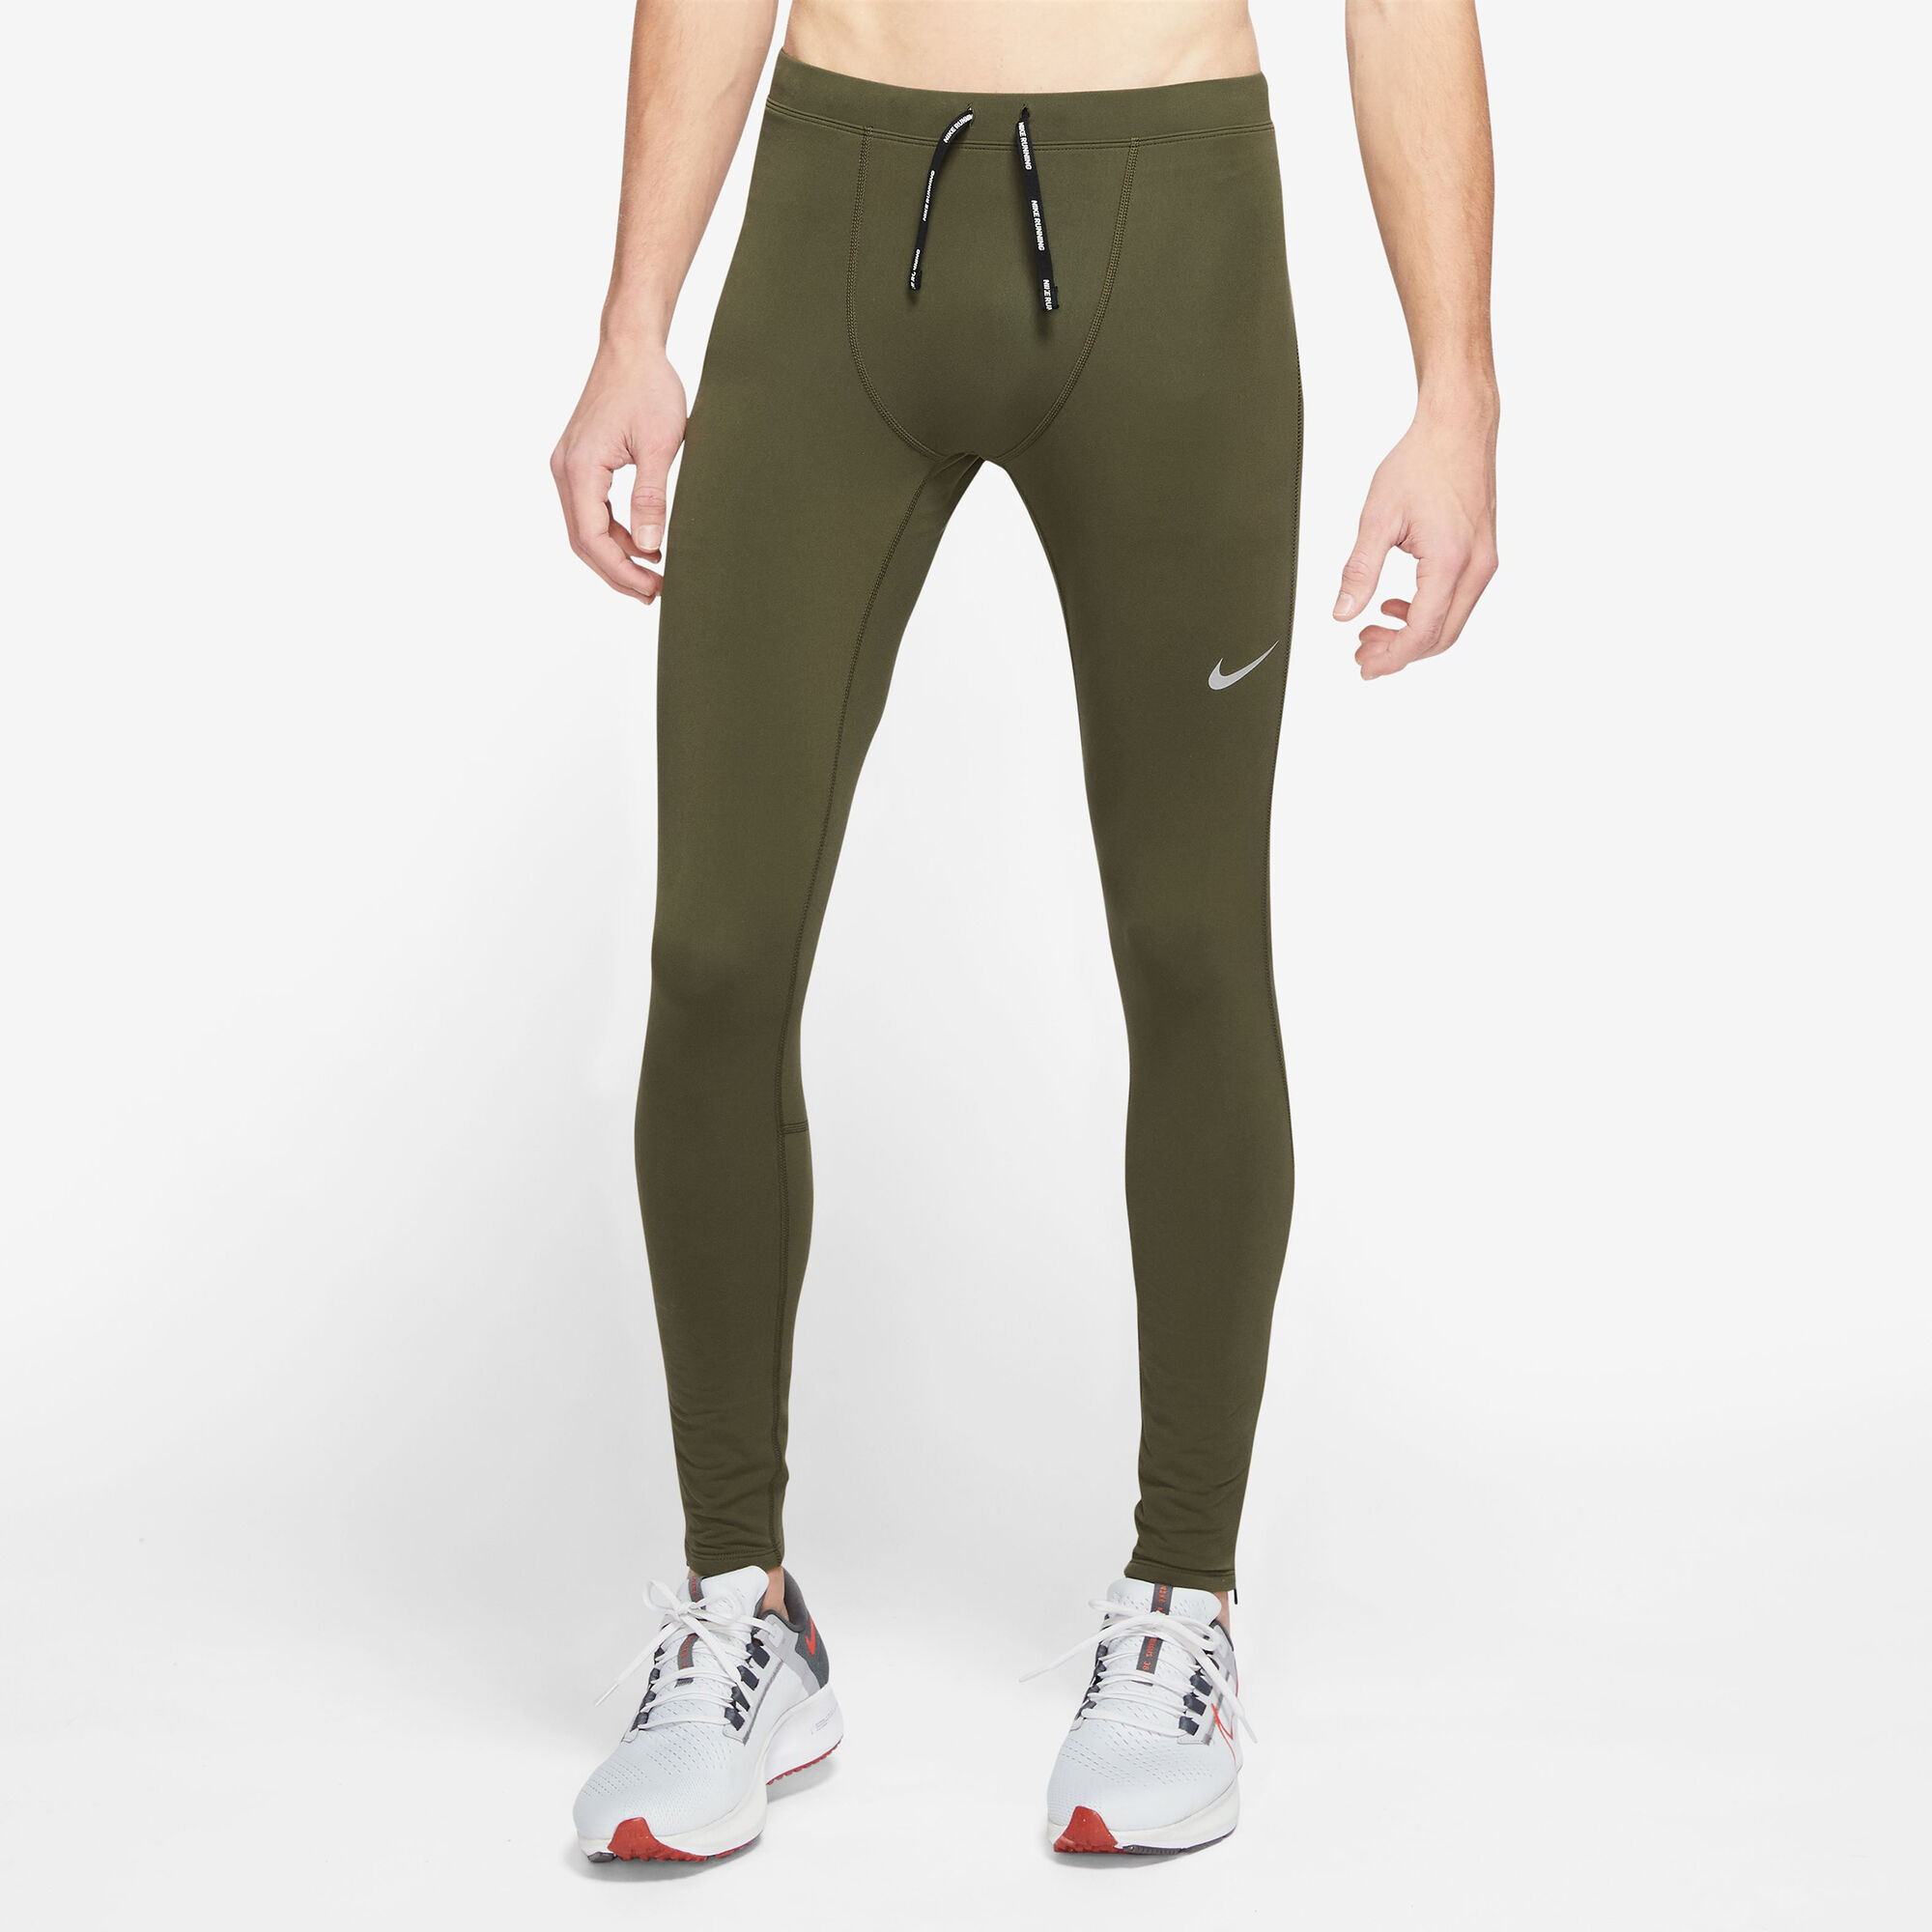 Buy Nike Challenger Repel Tight Men Olive, Grey online